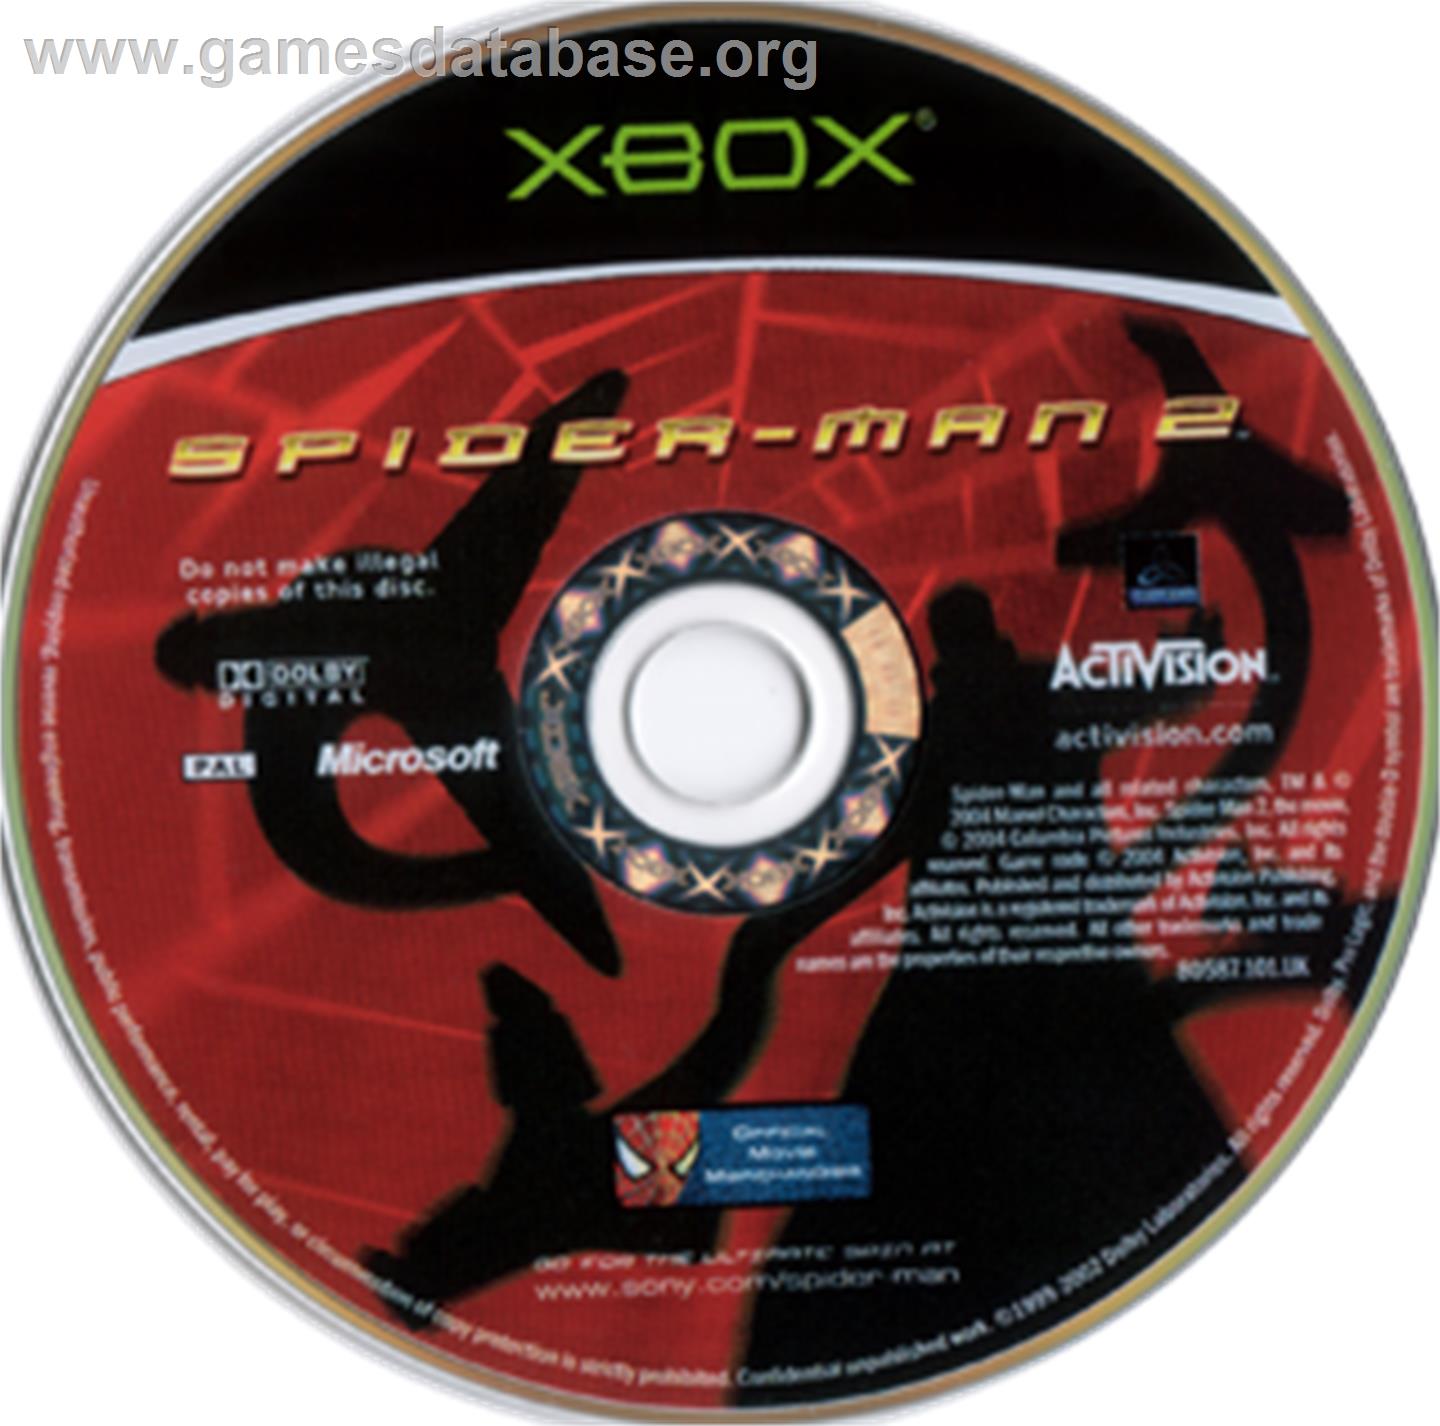 Spider-Man 2 - Microsoft Xbox - Artwork - CD